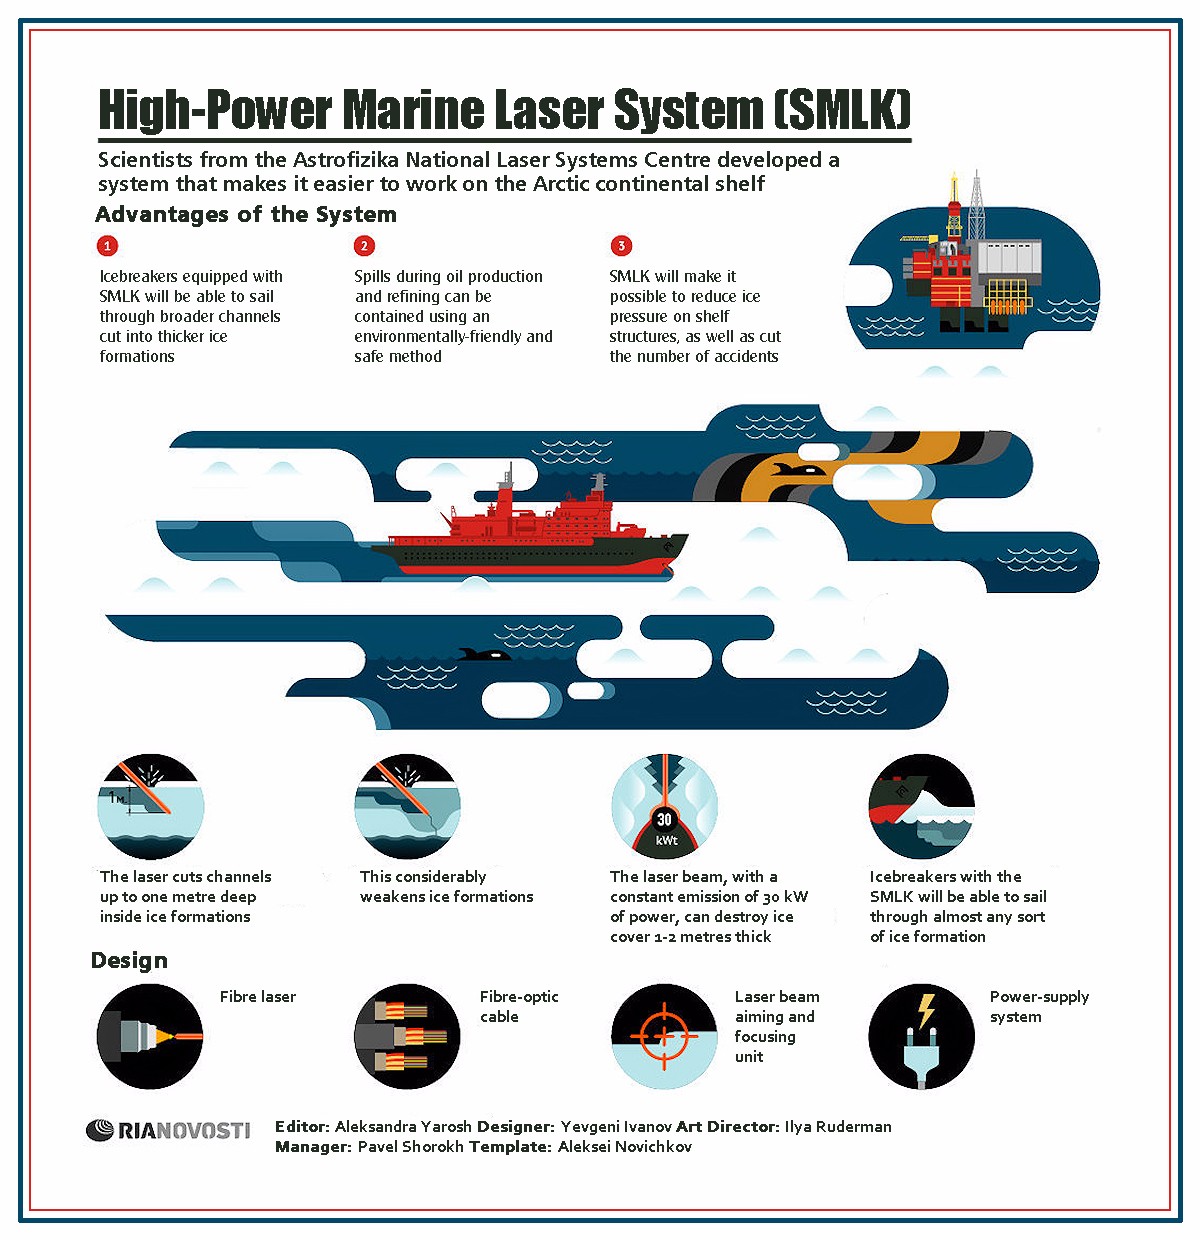 00 RIA-Novosti Infographics. High-Power Marine Laser System (SMLK). 2013